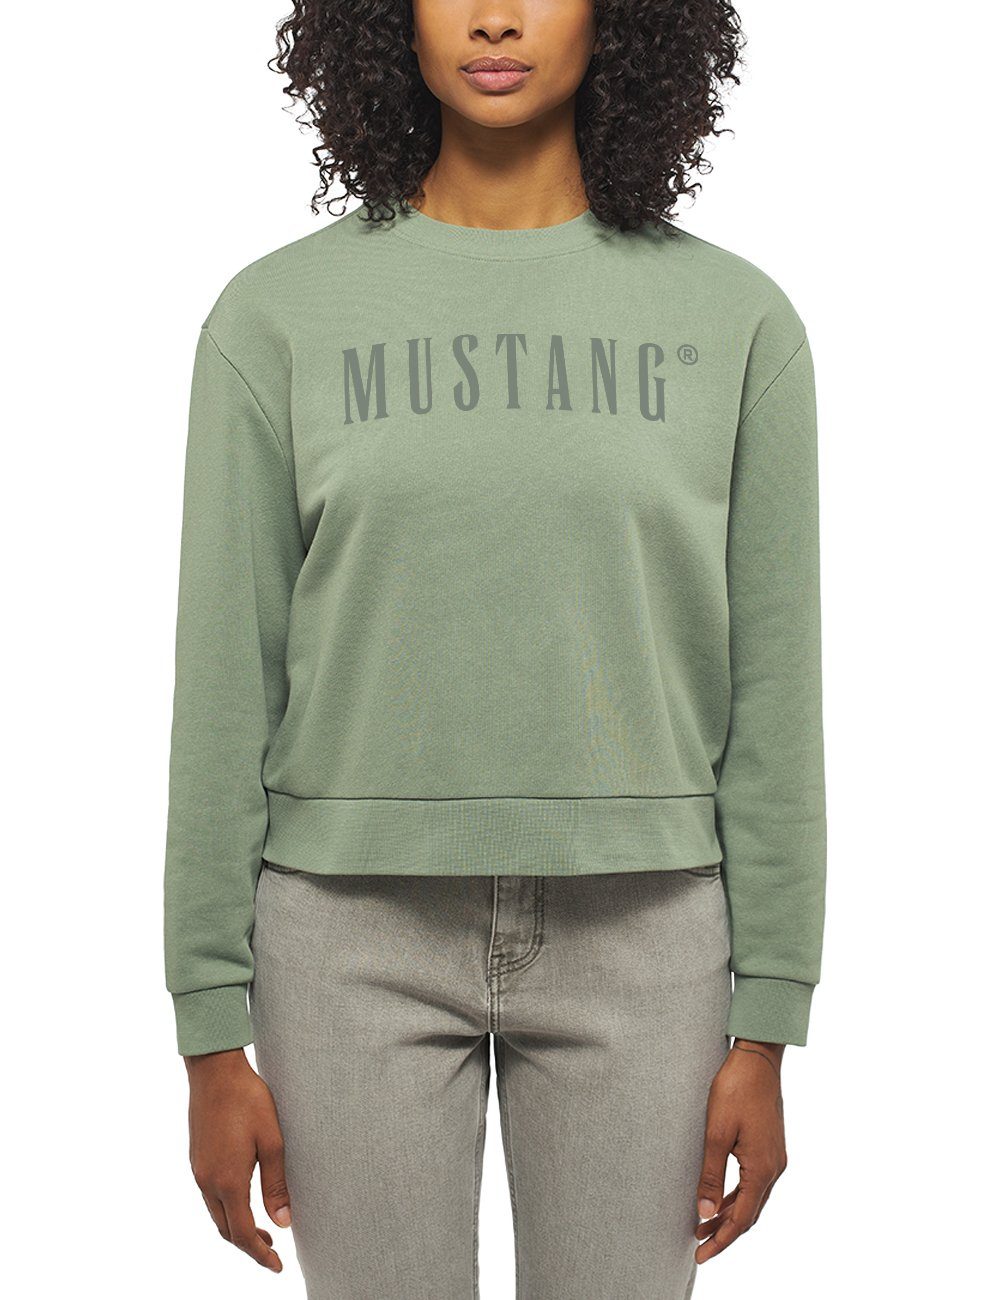 MUSTANG Logo Style Bea Mustang Sweatshirt C grün Print